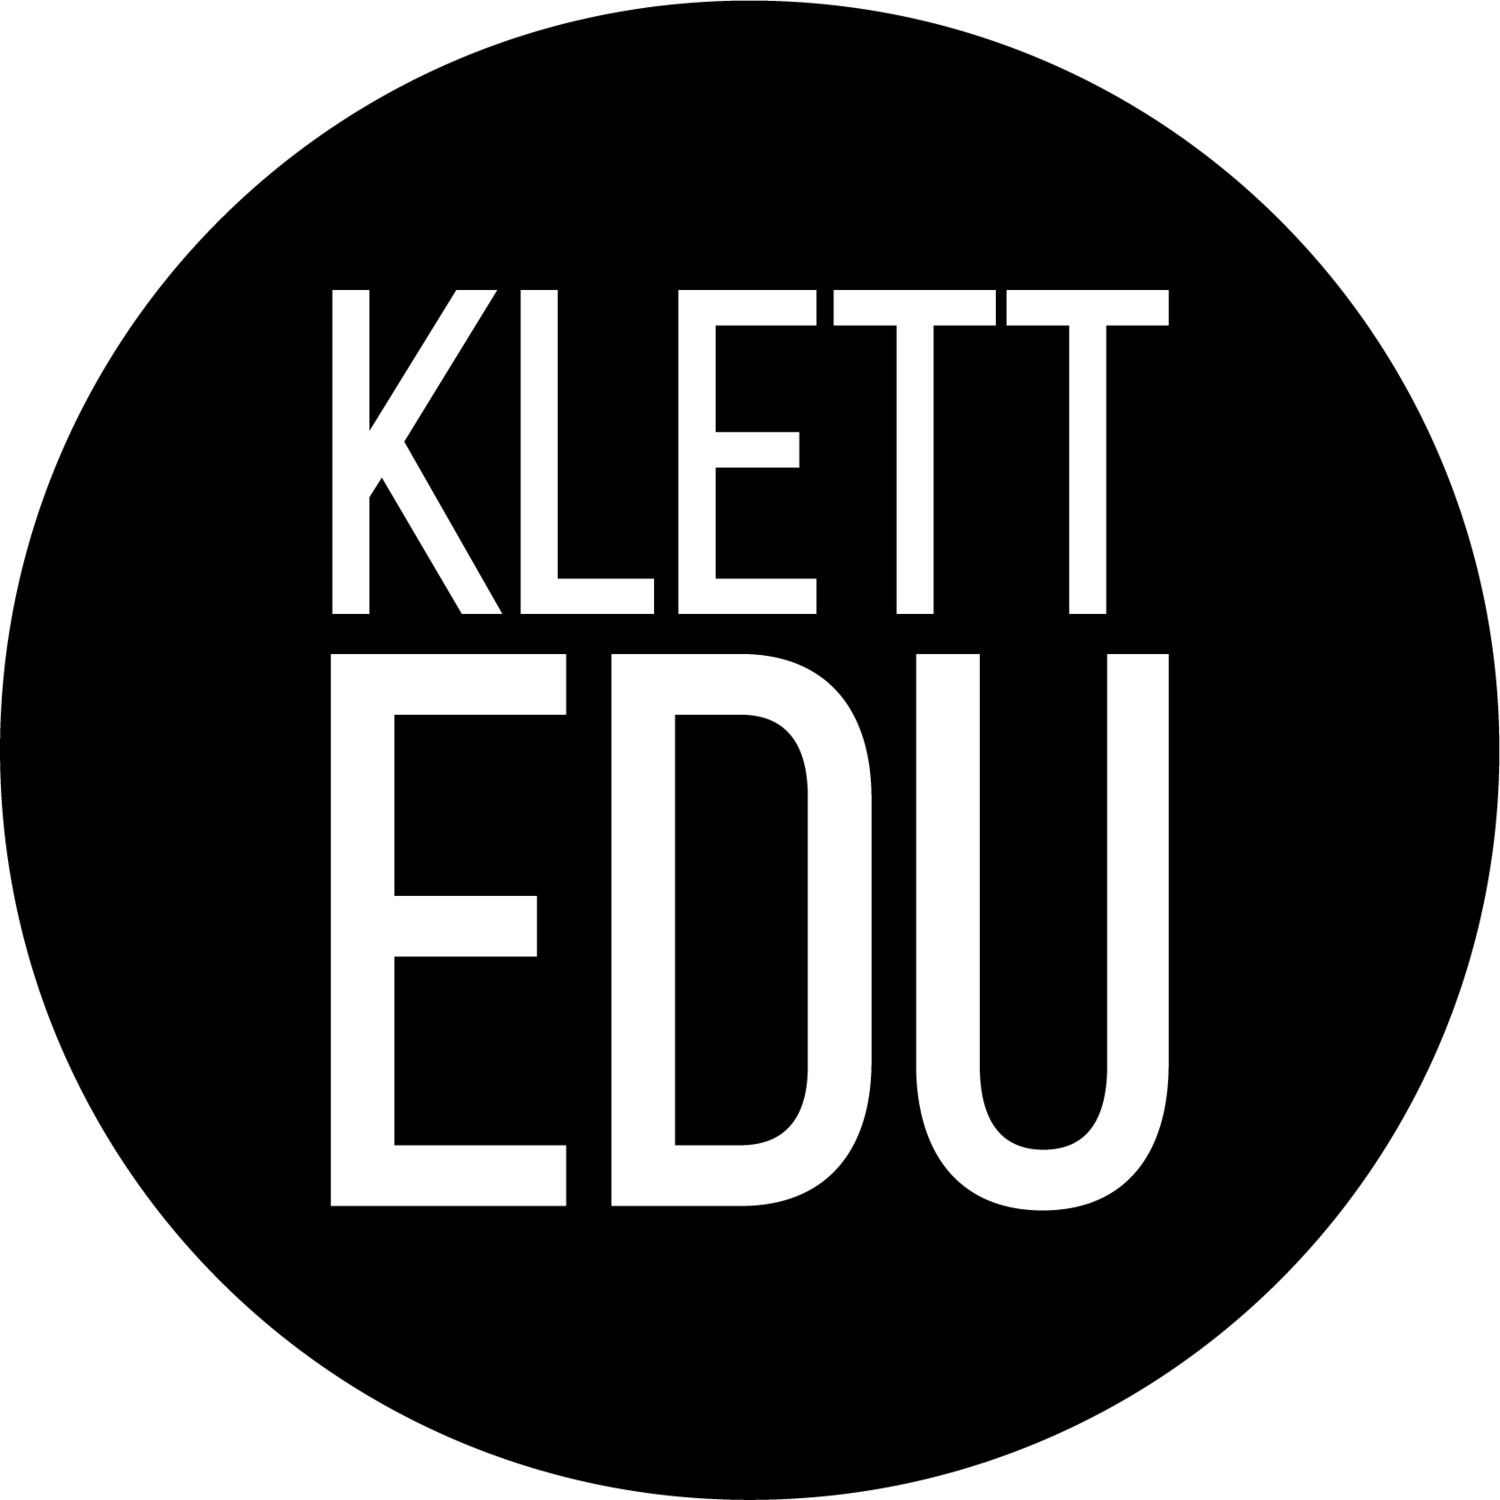 About us — Klett EDU